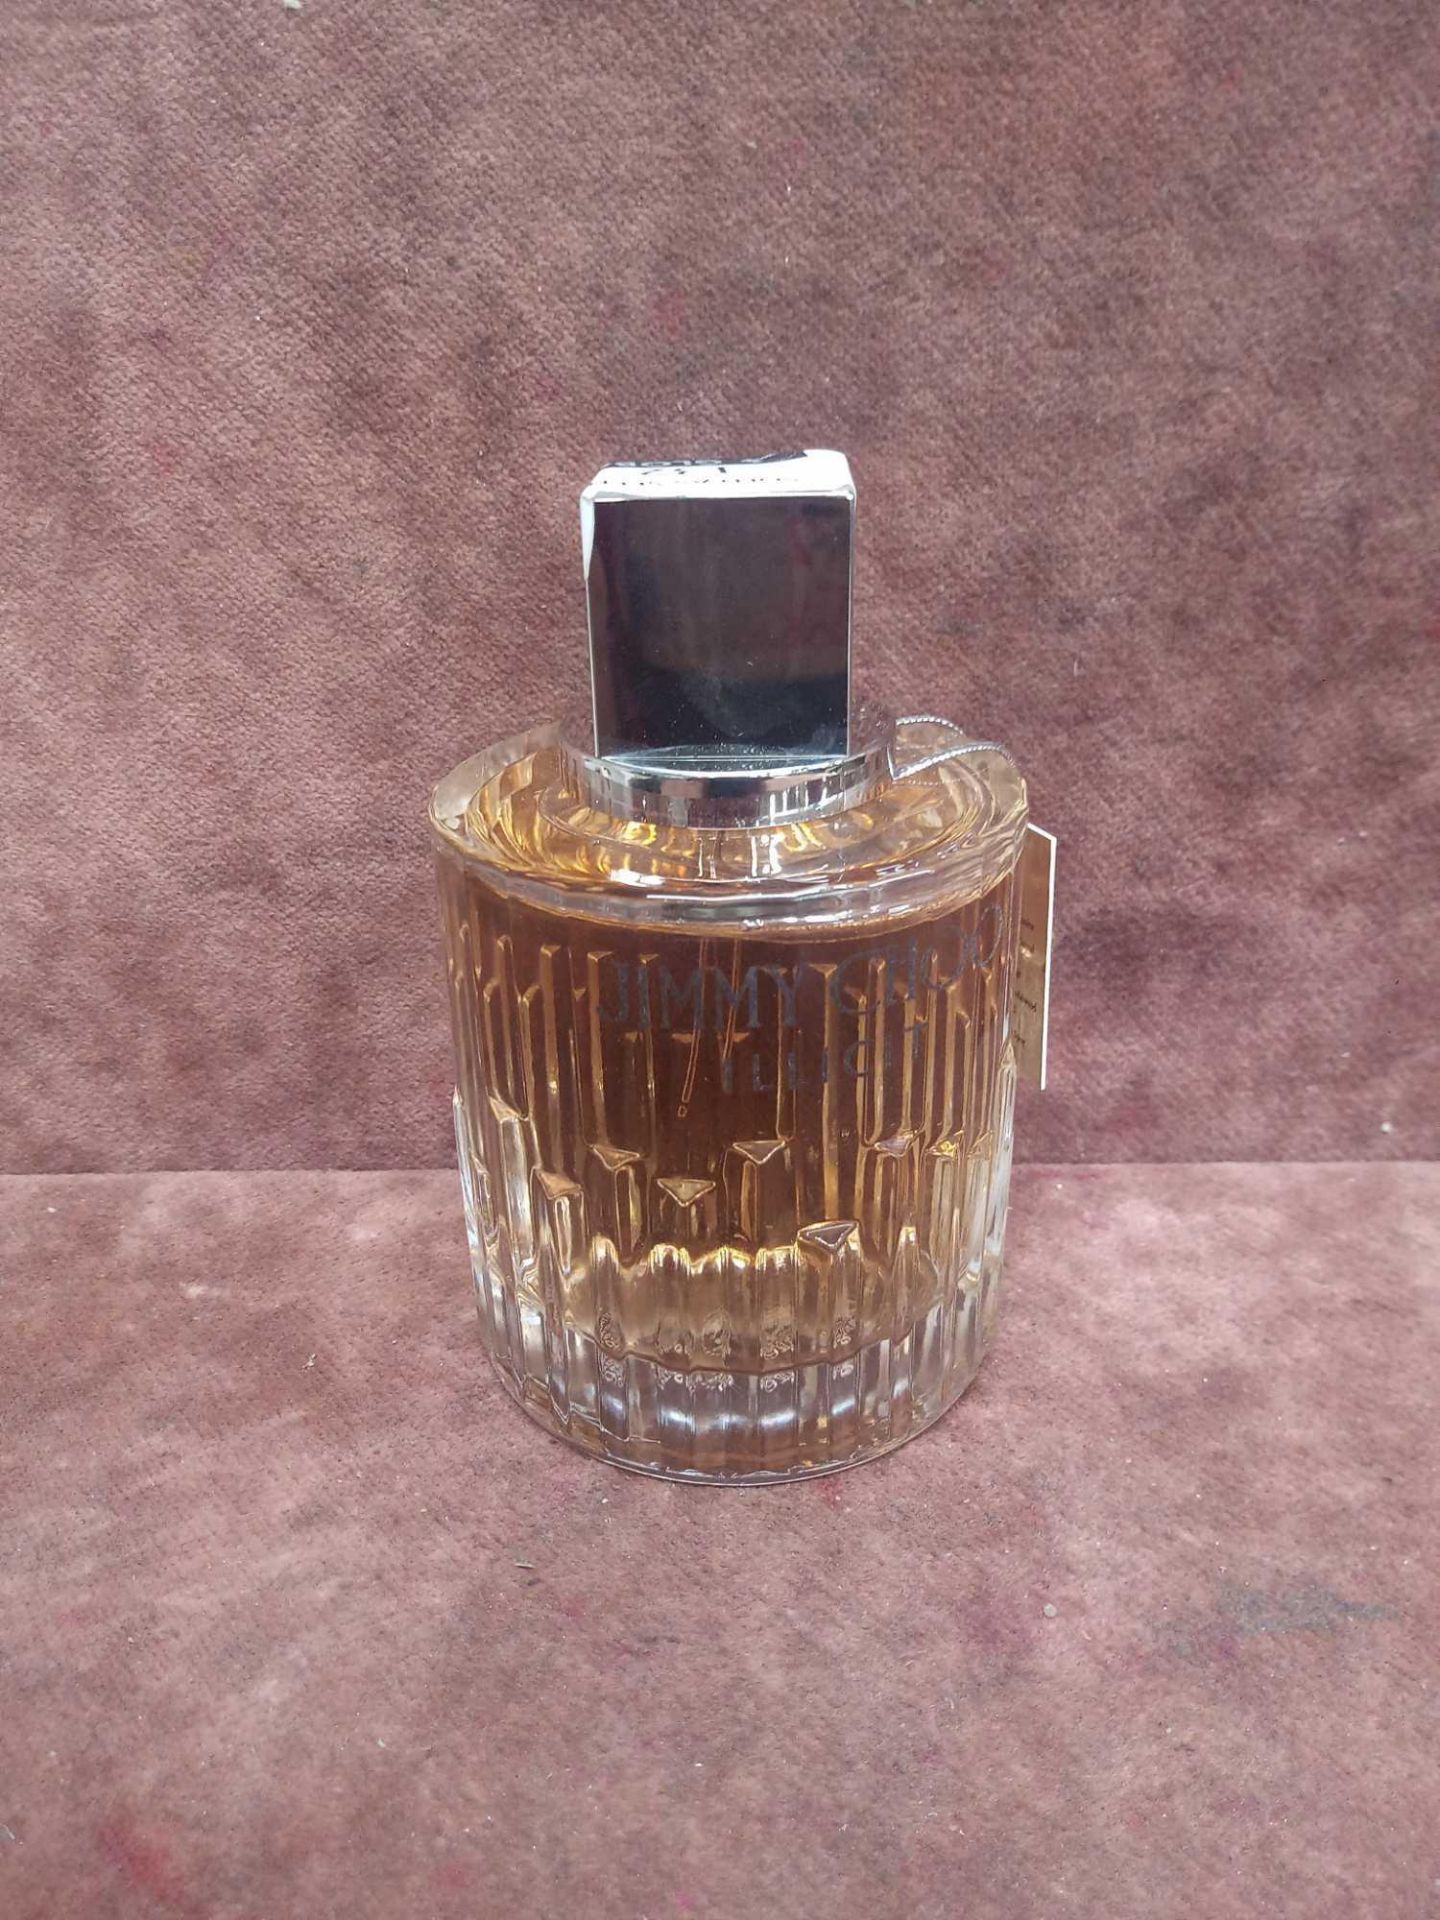 (Jb ) RRP £90 Unboxed 100Ml Tester Bottle Of Jimmy Choo Illicit Eau De Parfum Spray Ex-Display